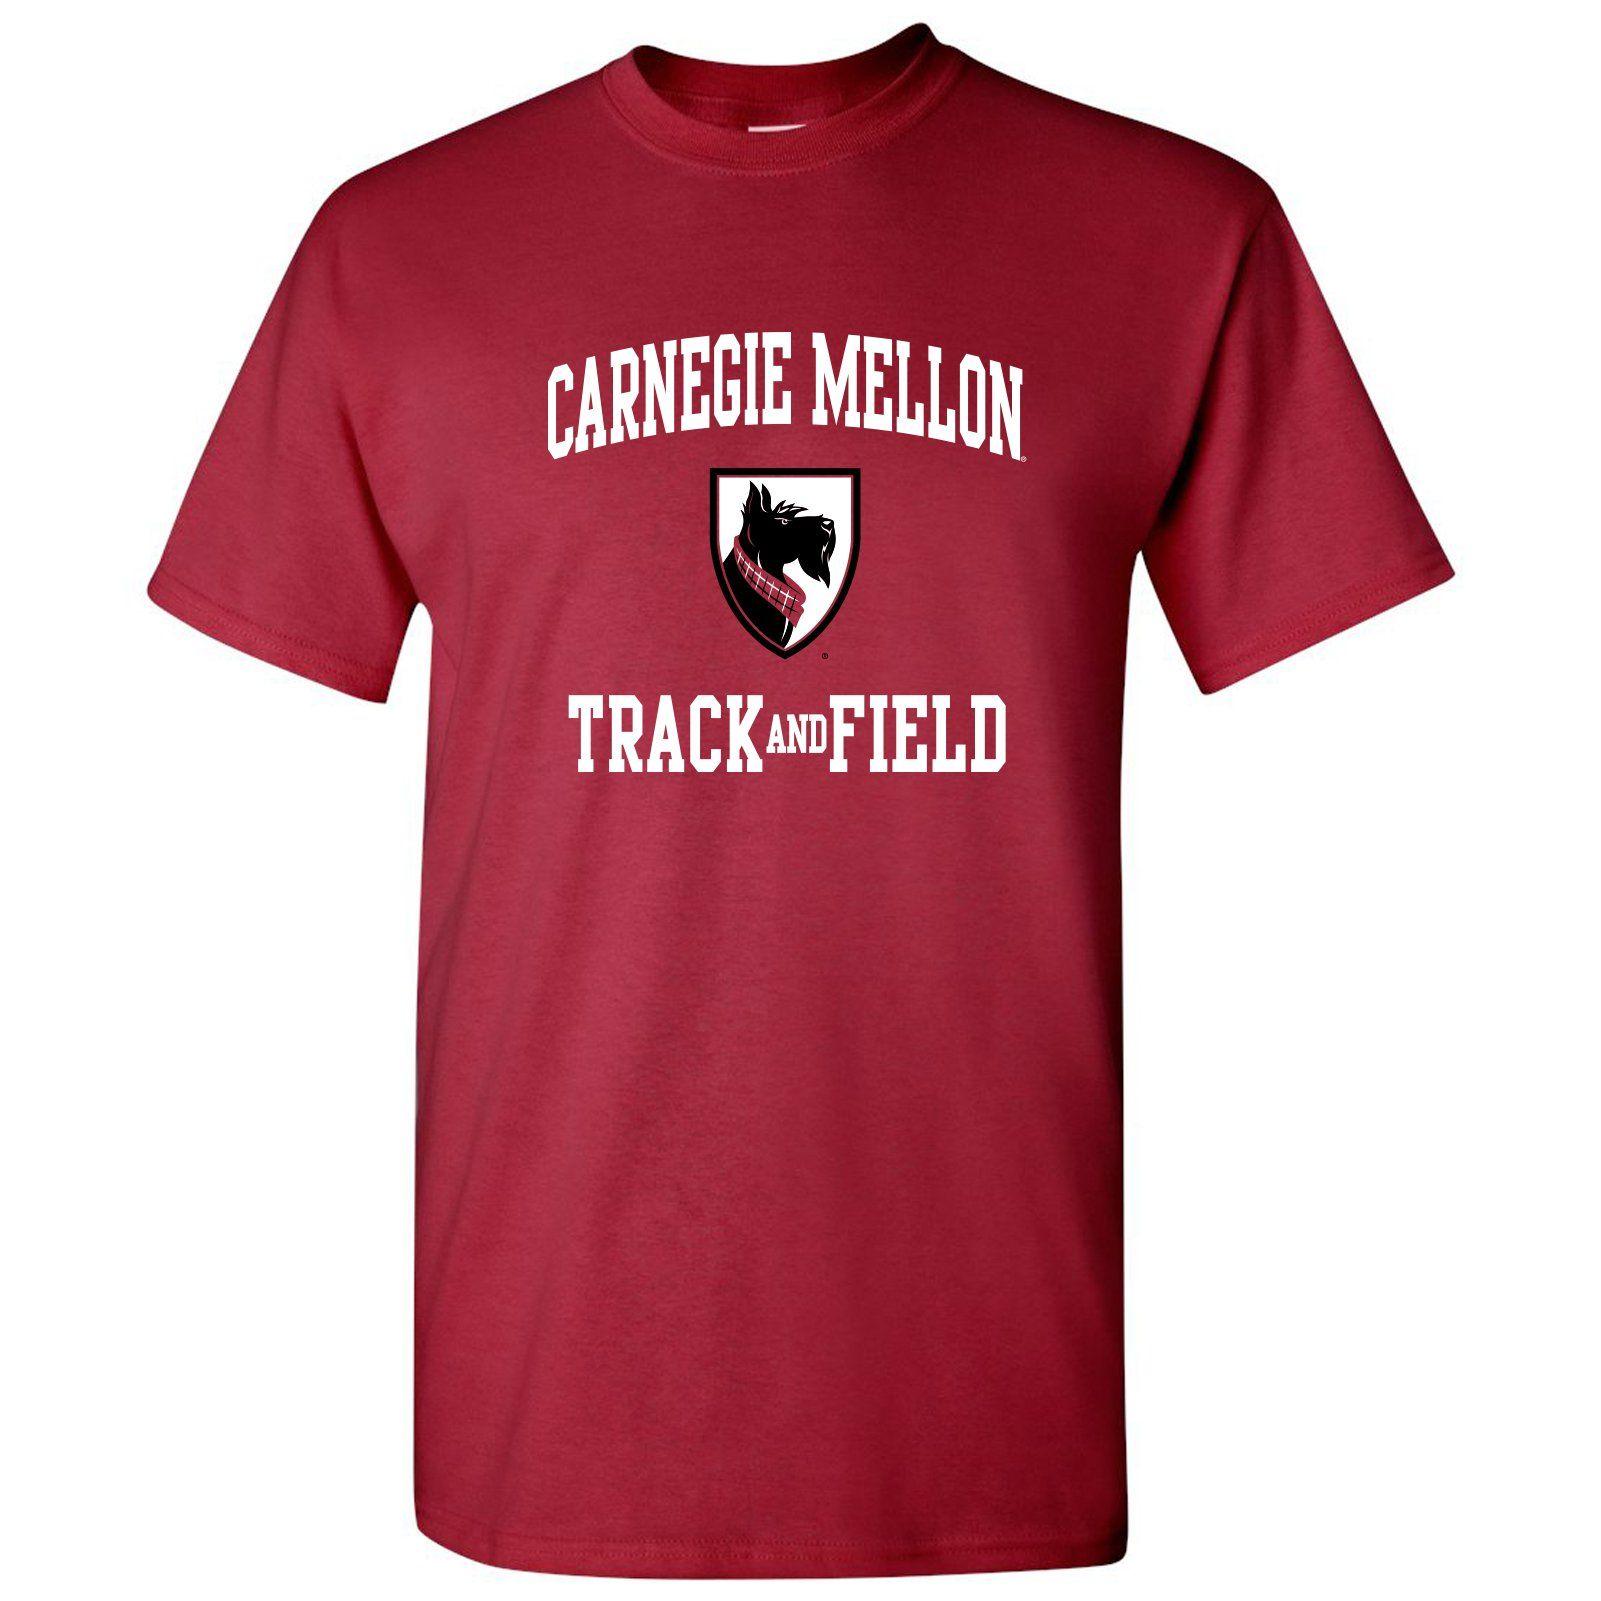 Carnegie Mellon Sports Logo - Carnegie Mellon Arch Logo Track & Field T Shirt - Cardinal